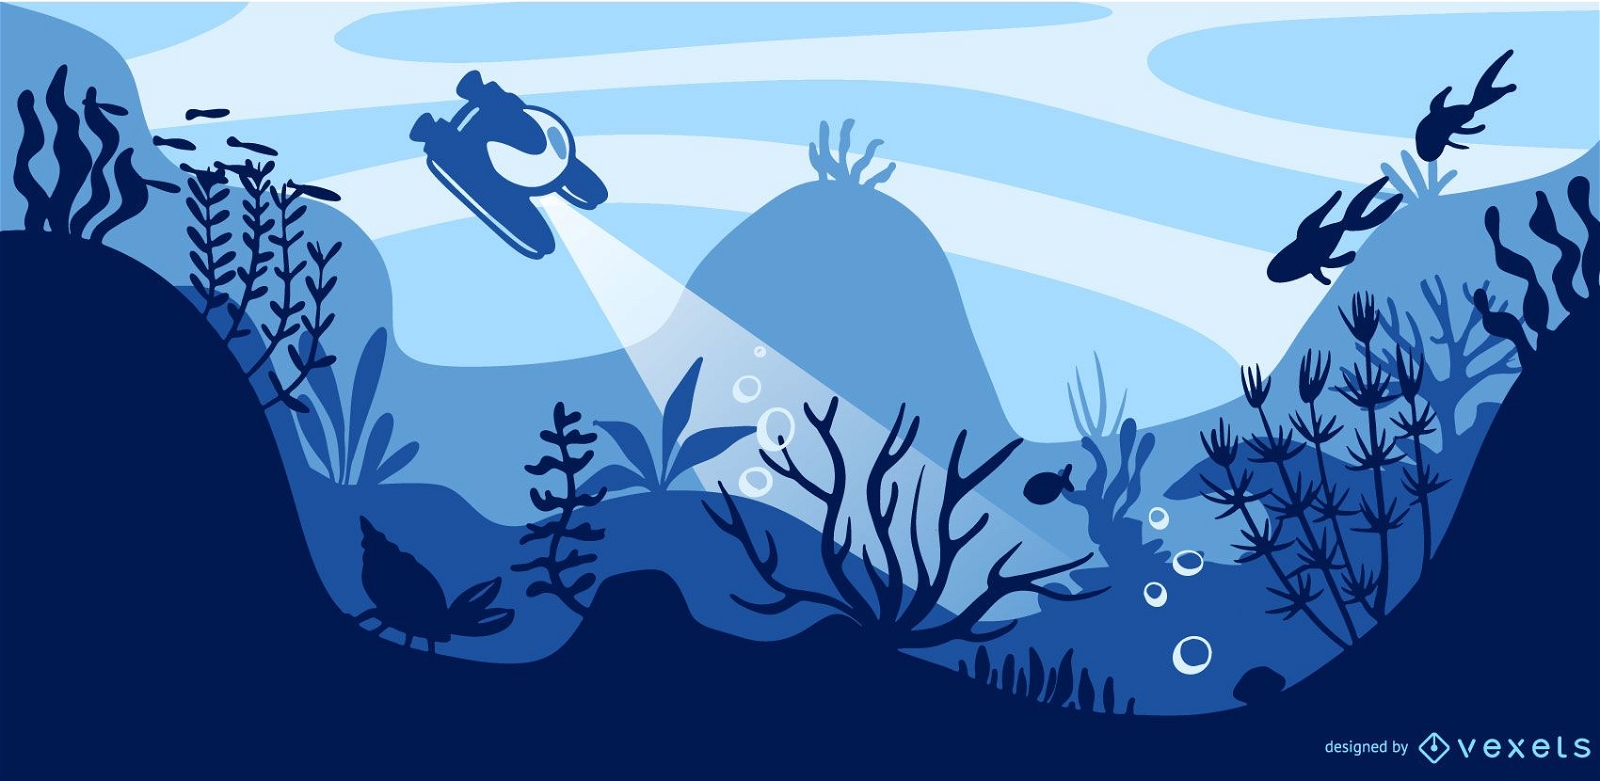 Underwater flat illustration design